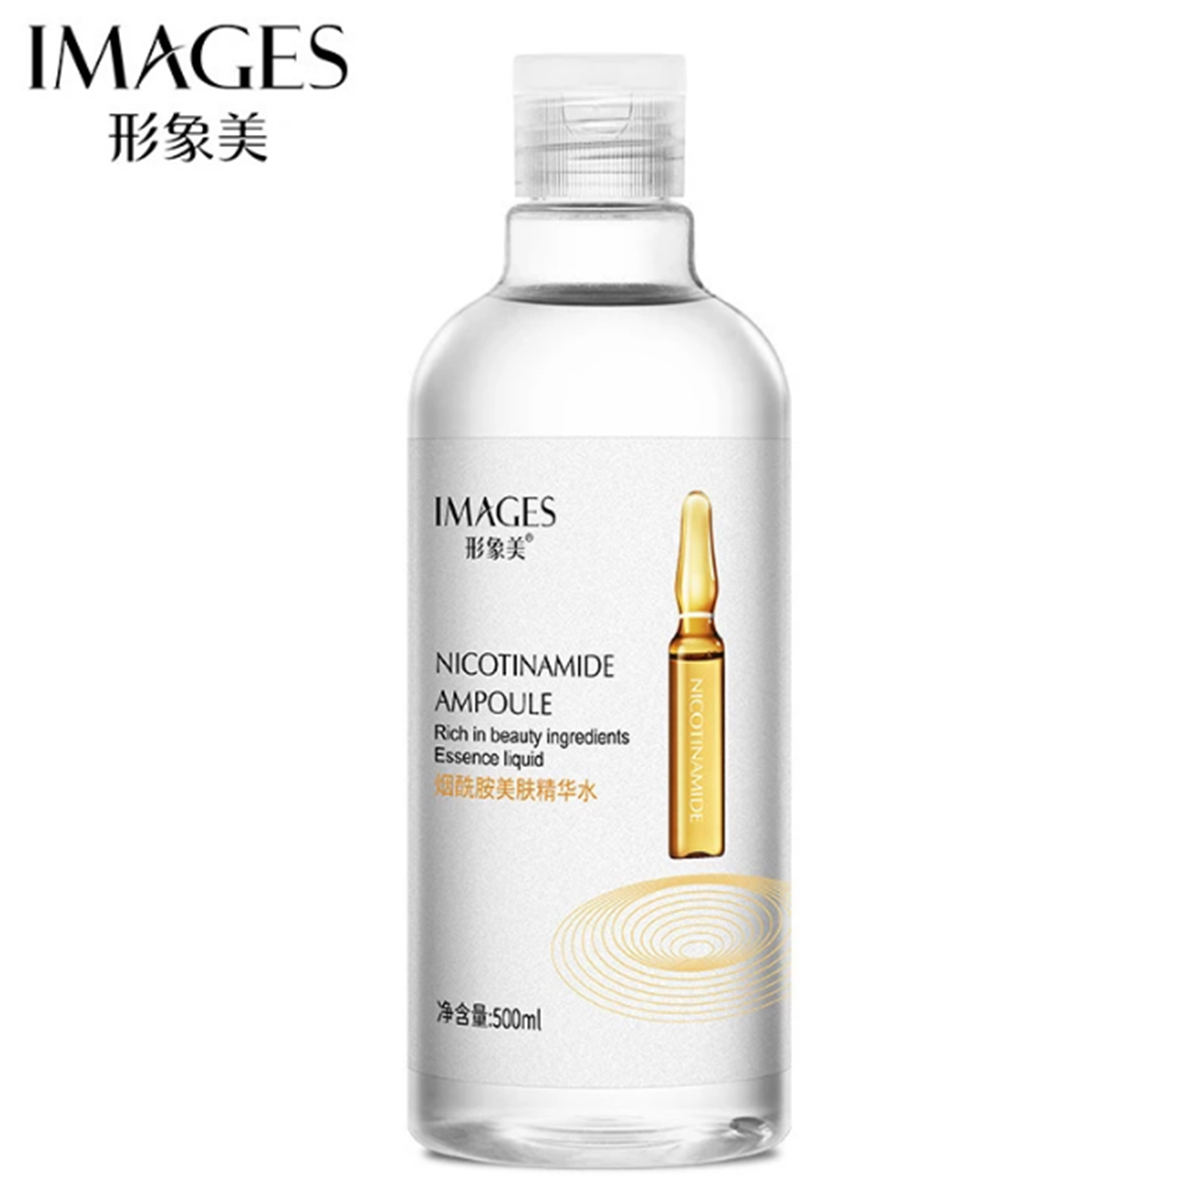 Images Nicotinamide Ampoule Toner Liquid 500ml Skincare Smooth Moisturize Shrink Pores Xxm16954